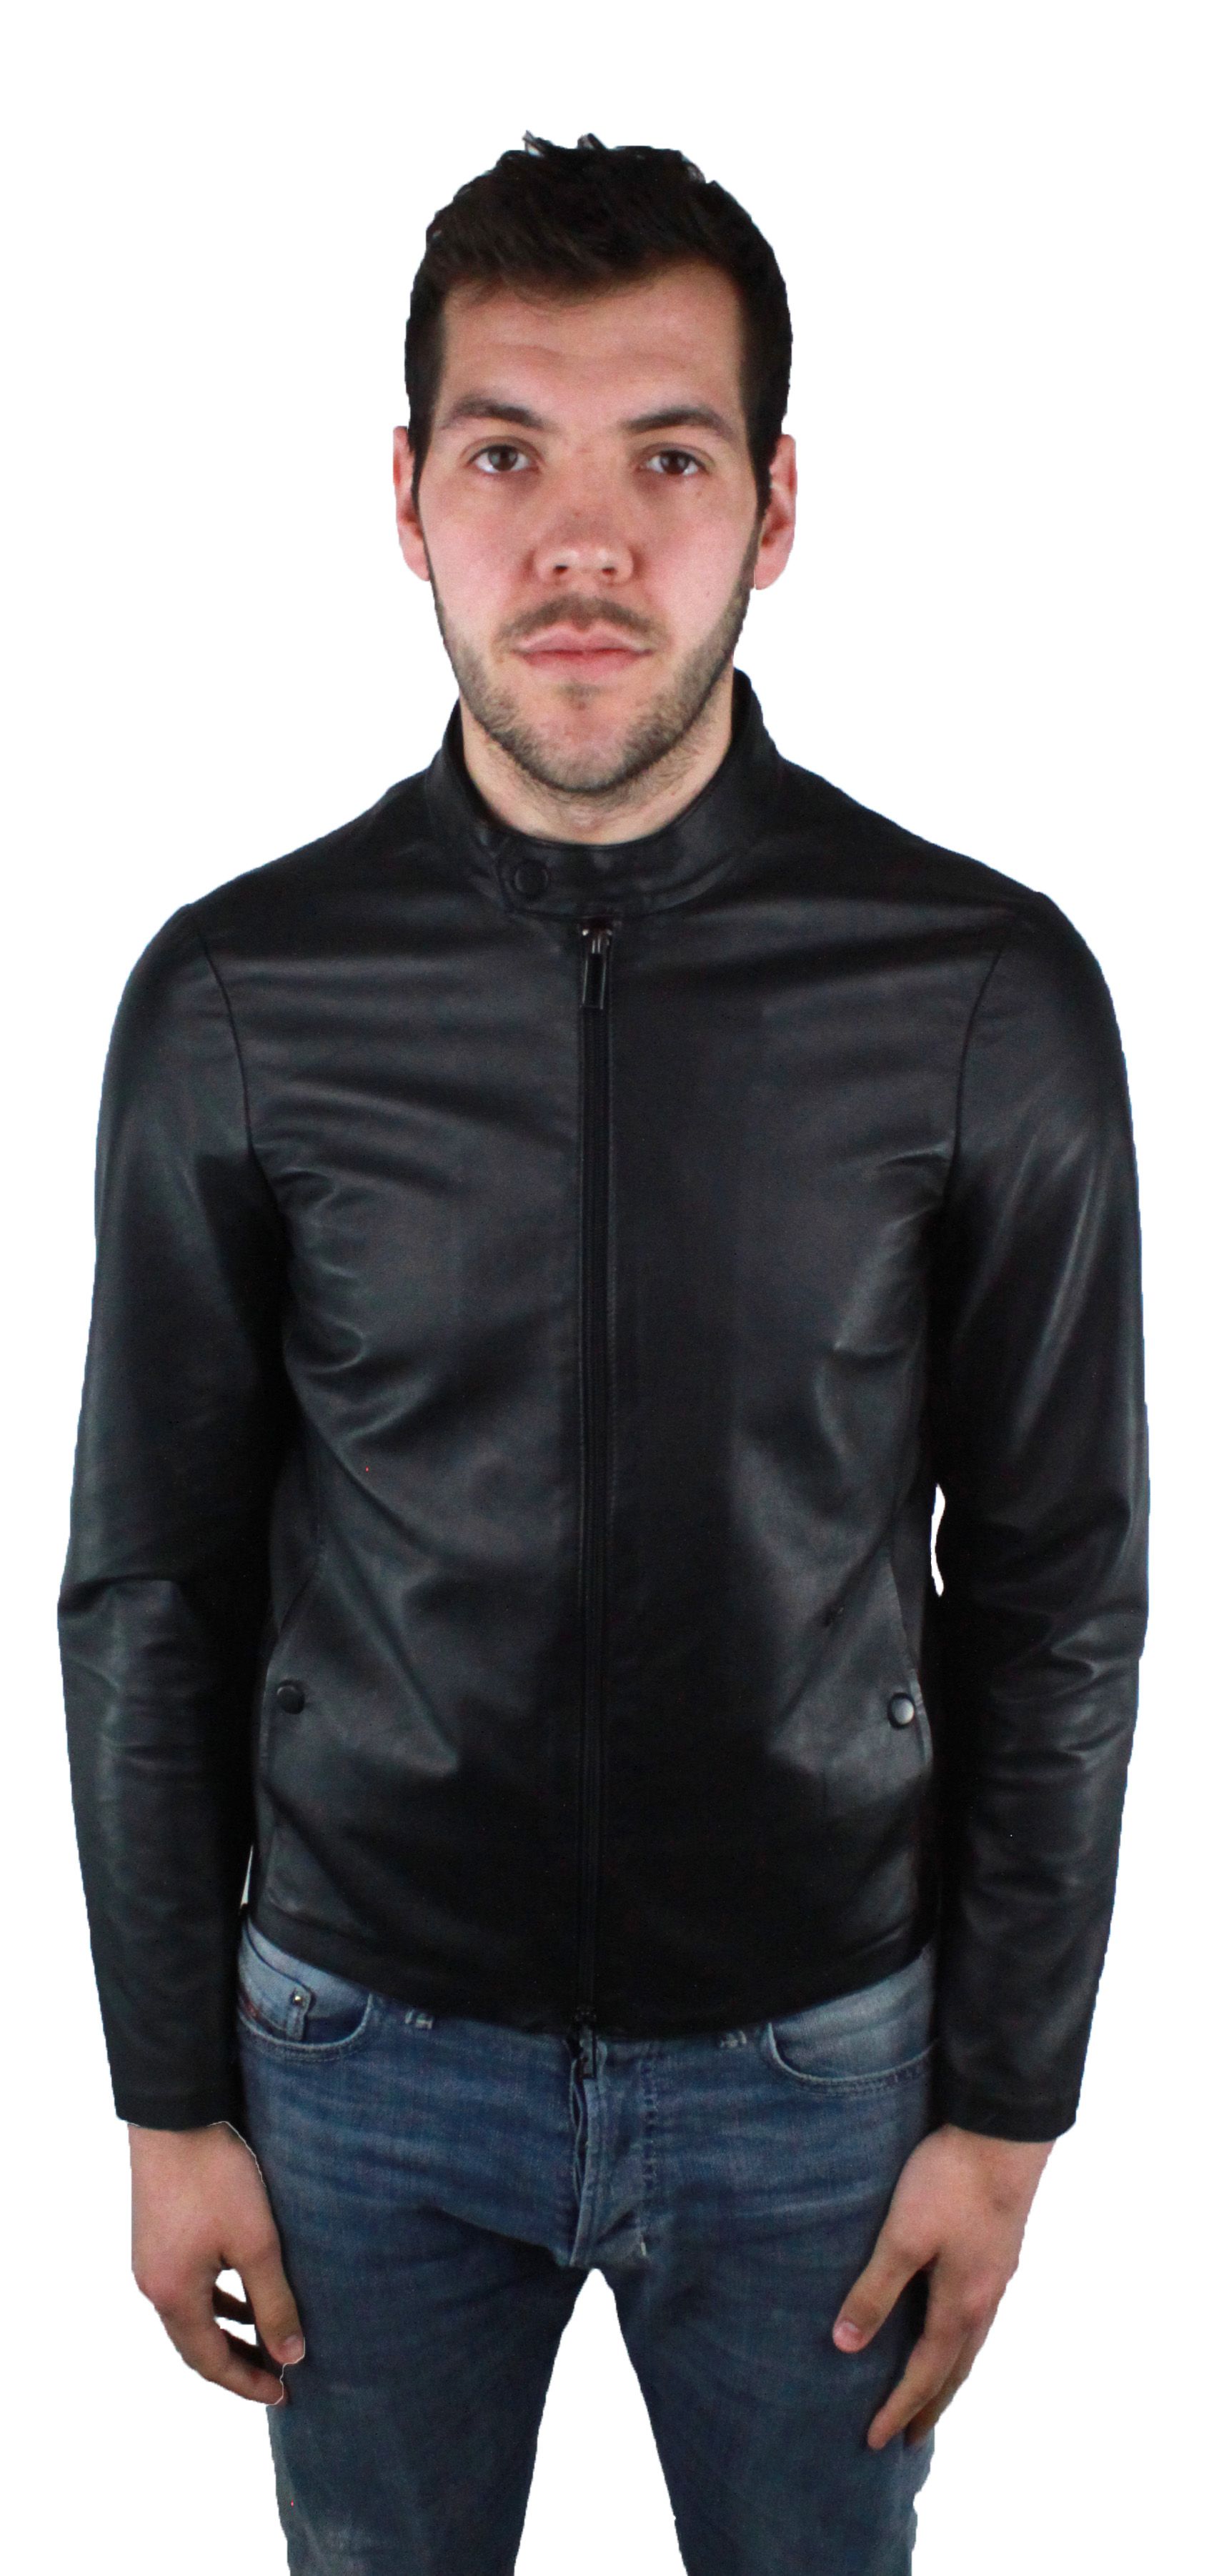 Emporio Armani 3Z1BM5 1LBAZ 999 Leather Jacket. 100% Leather. Central Zip Closure. Branded Badge On Left Pocket. Chinese Collar. Product Code: 3Z1BM5 1BLAZ 0999